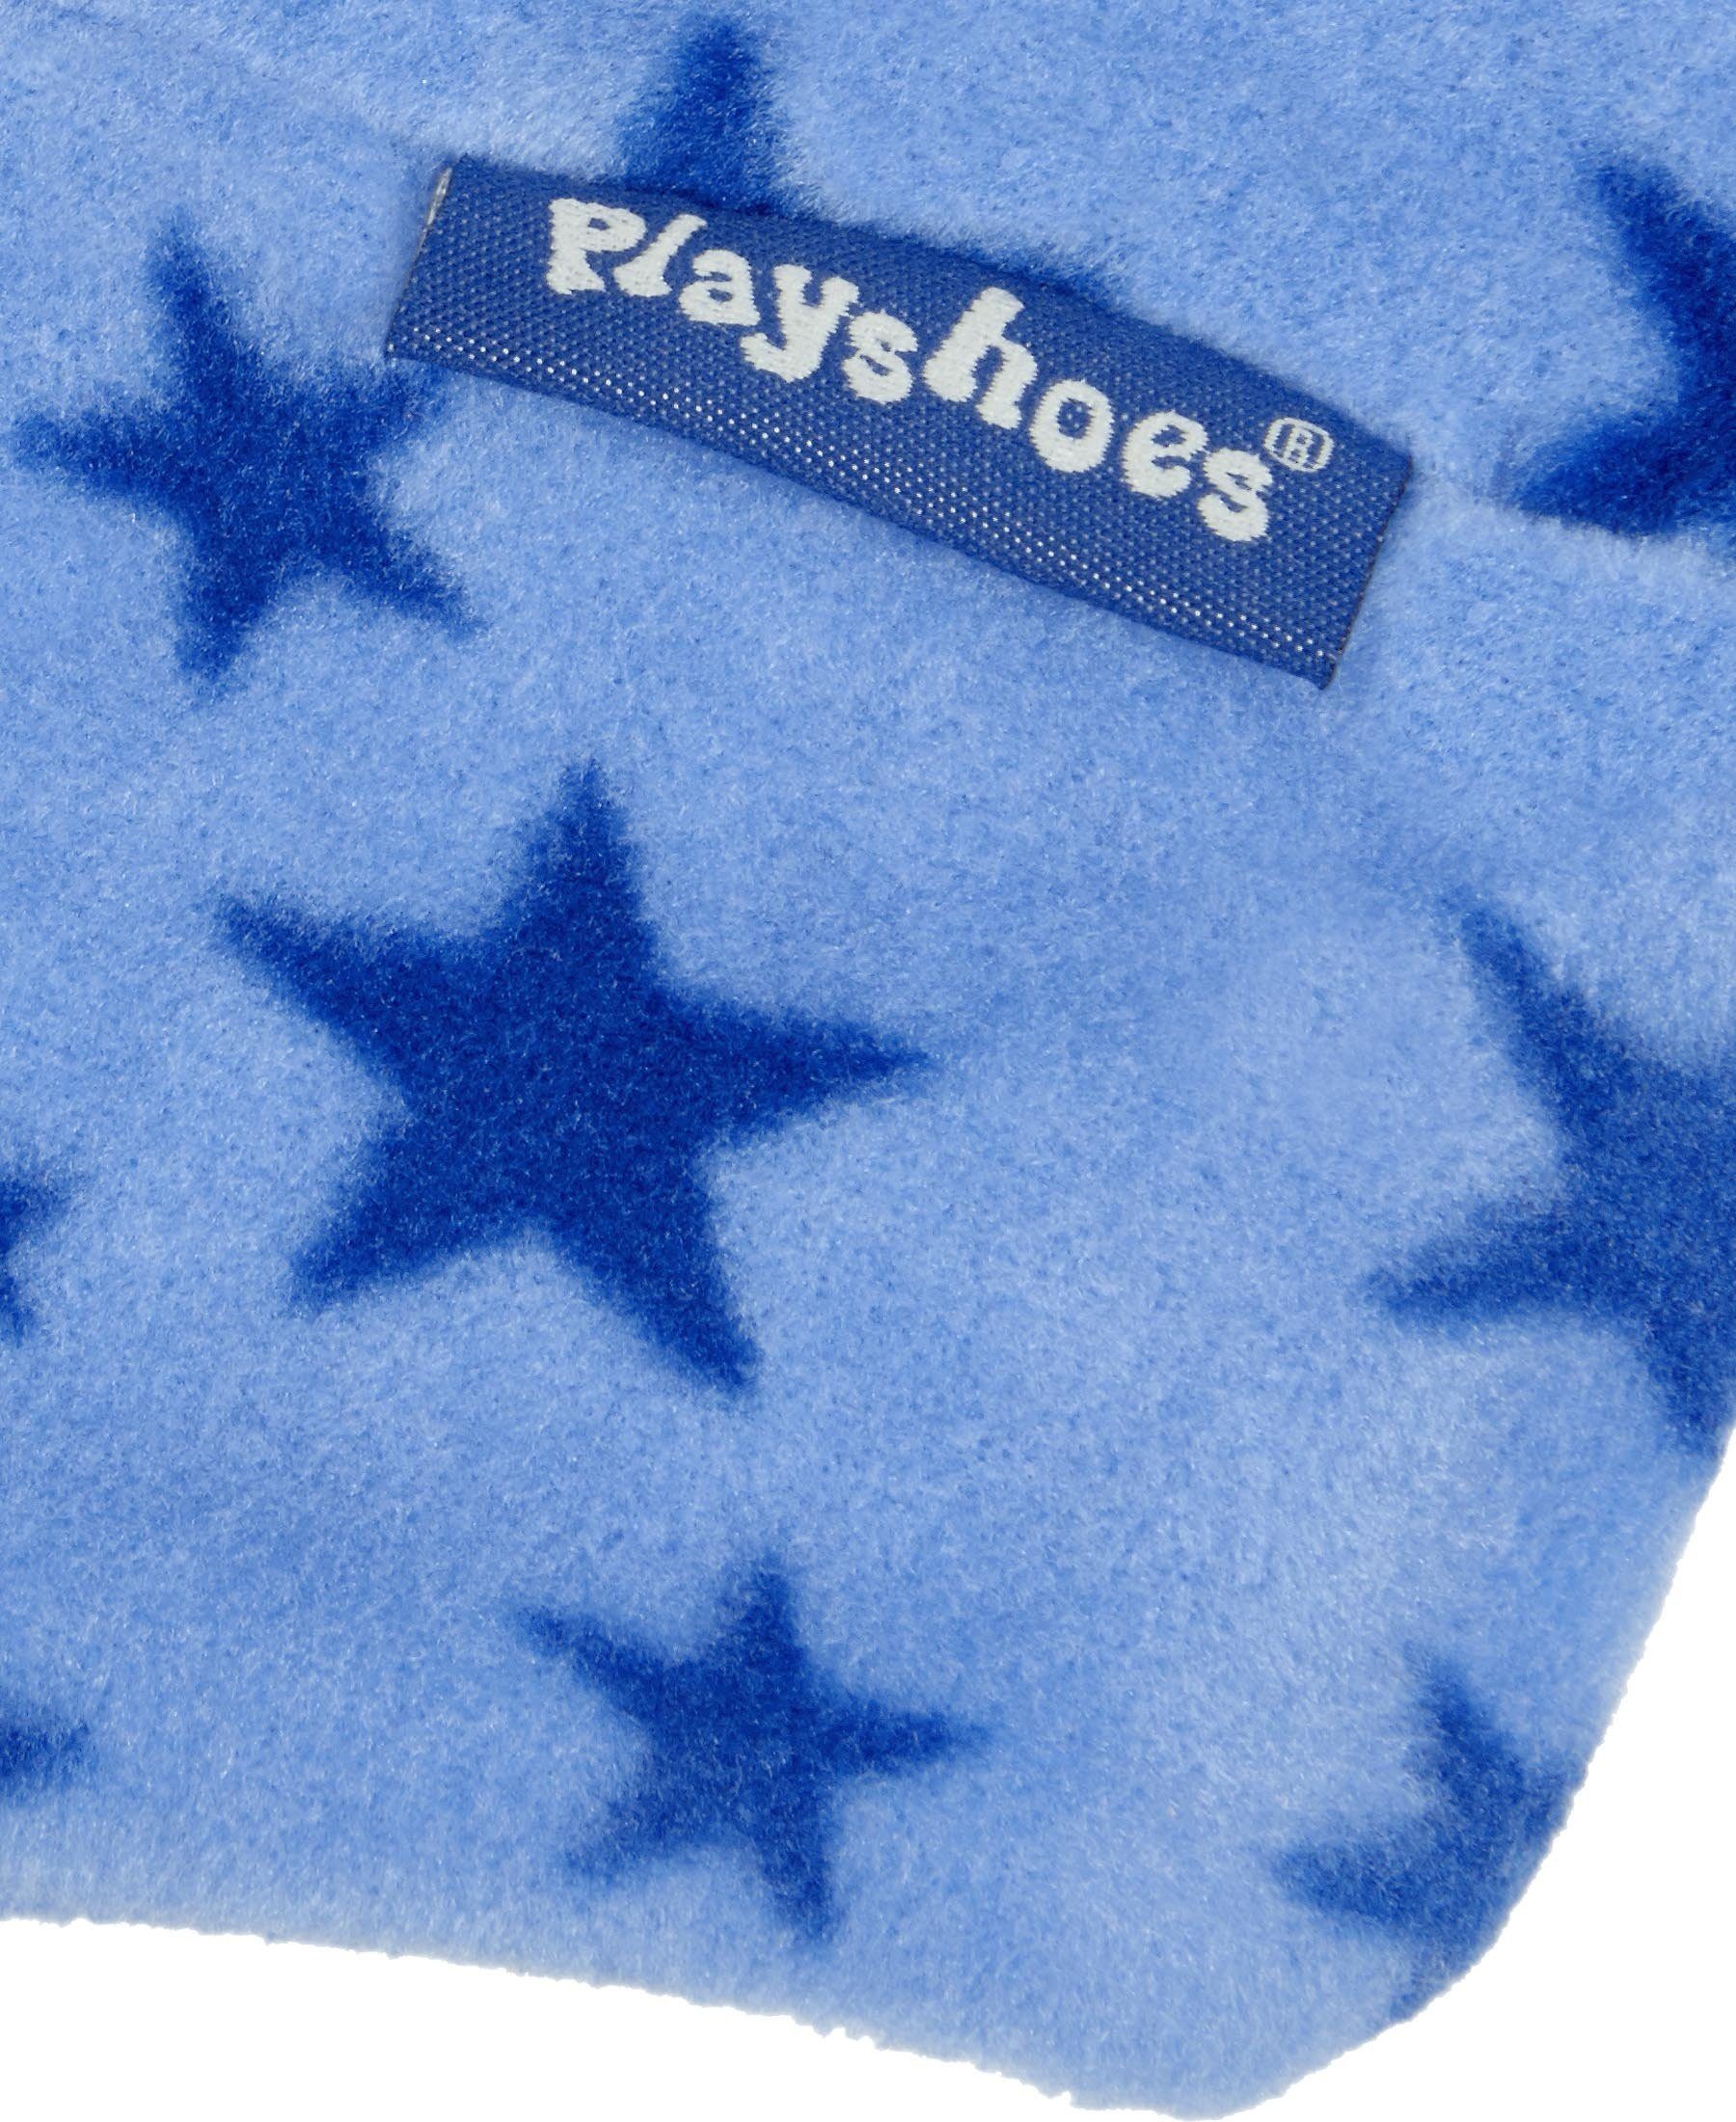 Sterne Playshoes Fleece-Zipfelmütze Blau Schlupfmütze